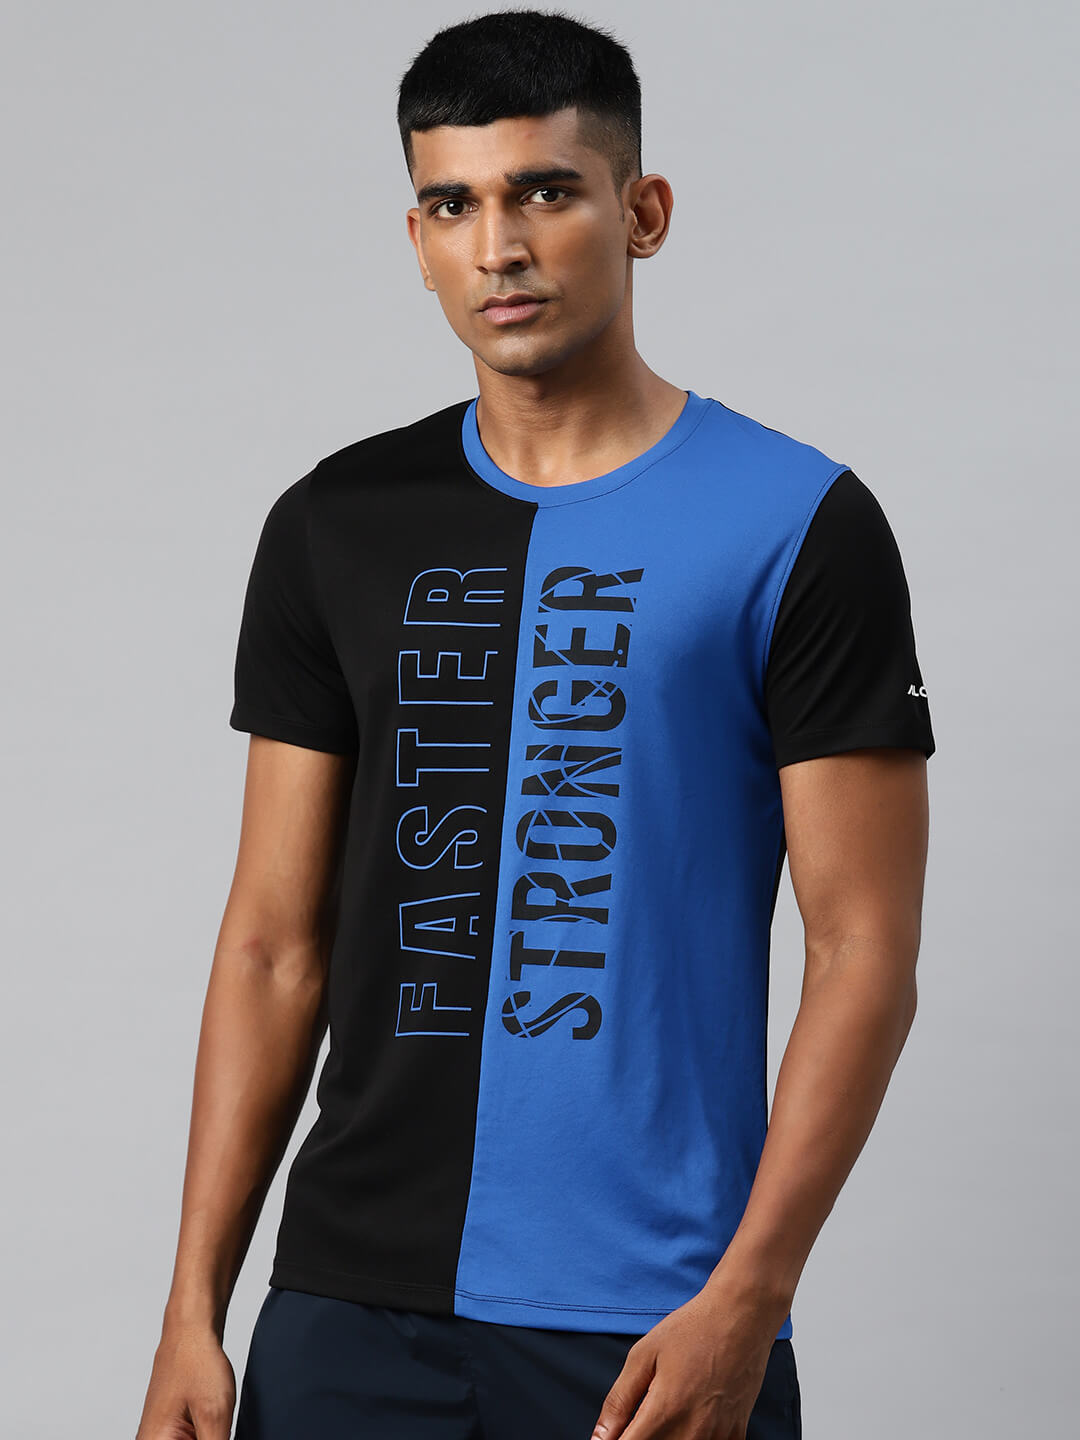 Alcis Men Typography Printed Colourblocked Dry Tech Slim Fit Sports T-shirt